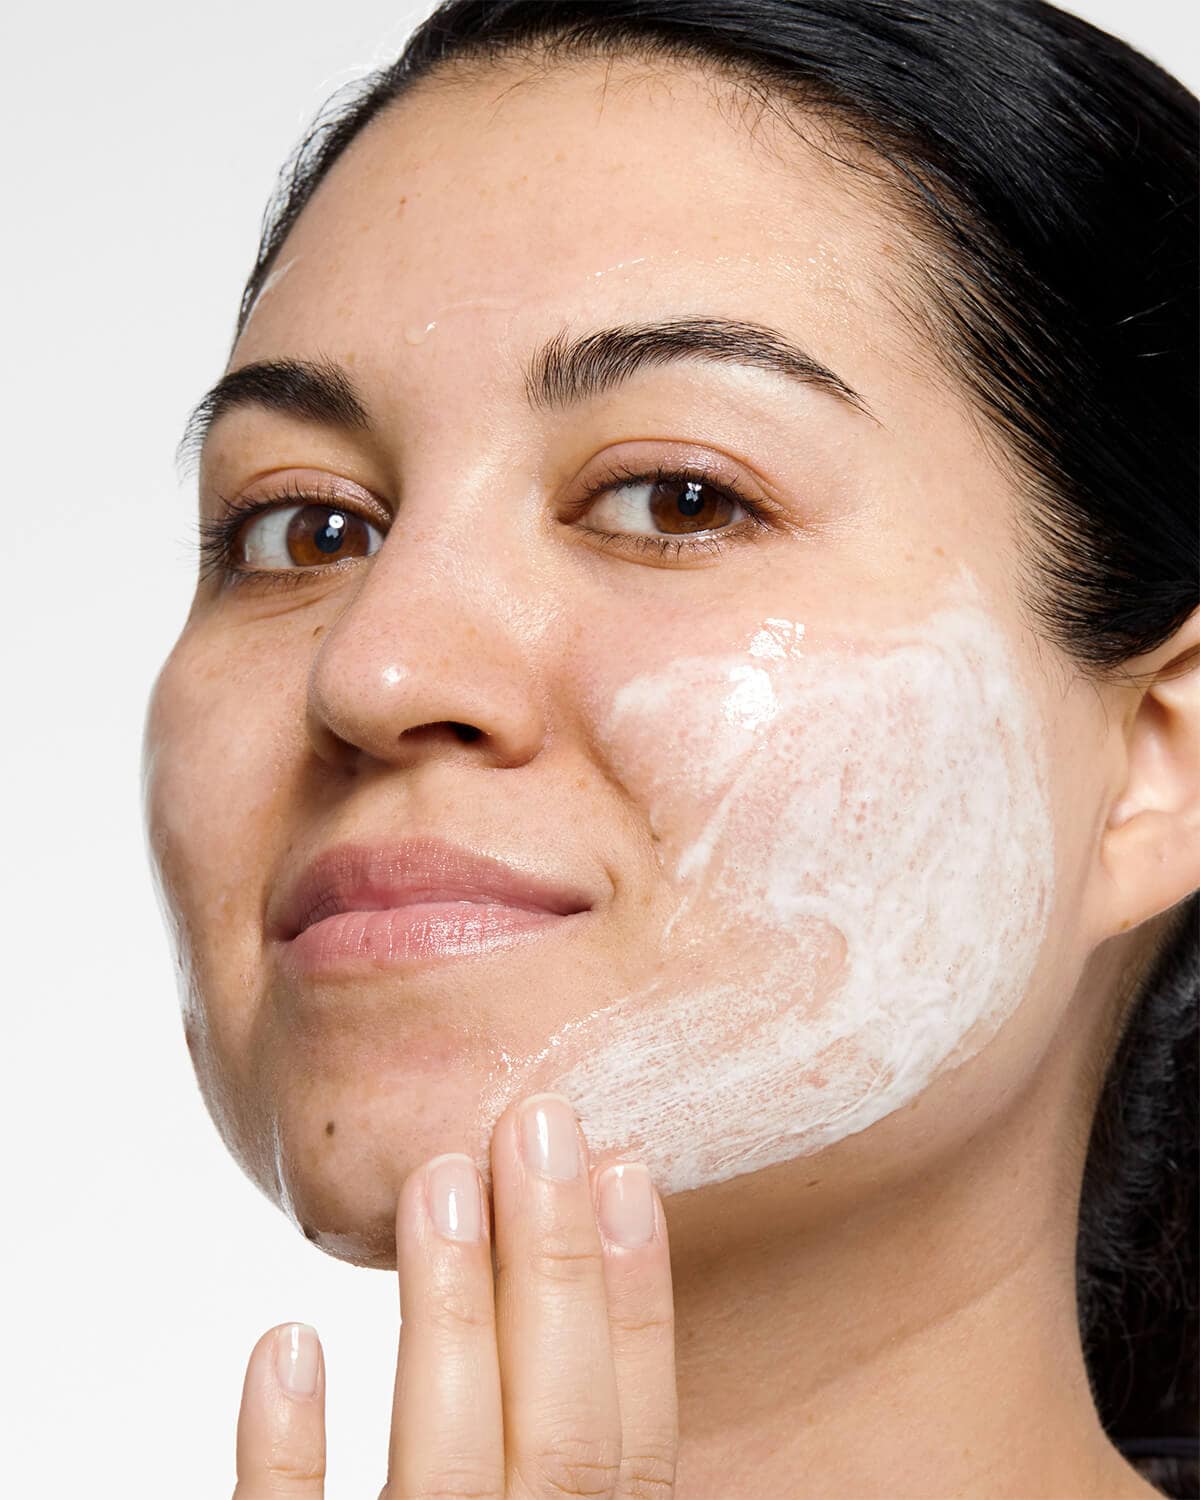 All About Clean™ Liquid Facial Soap | Clinique